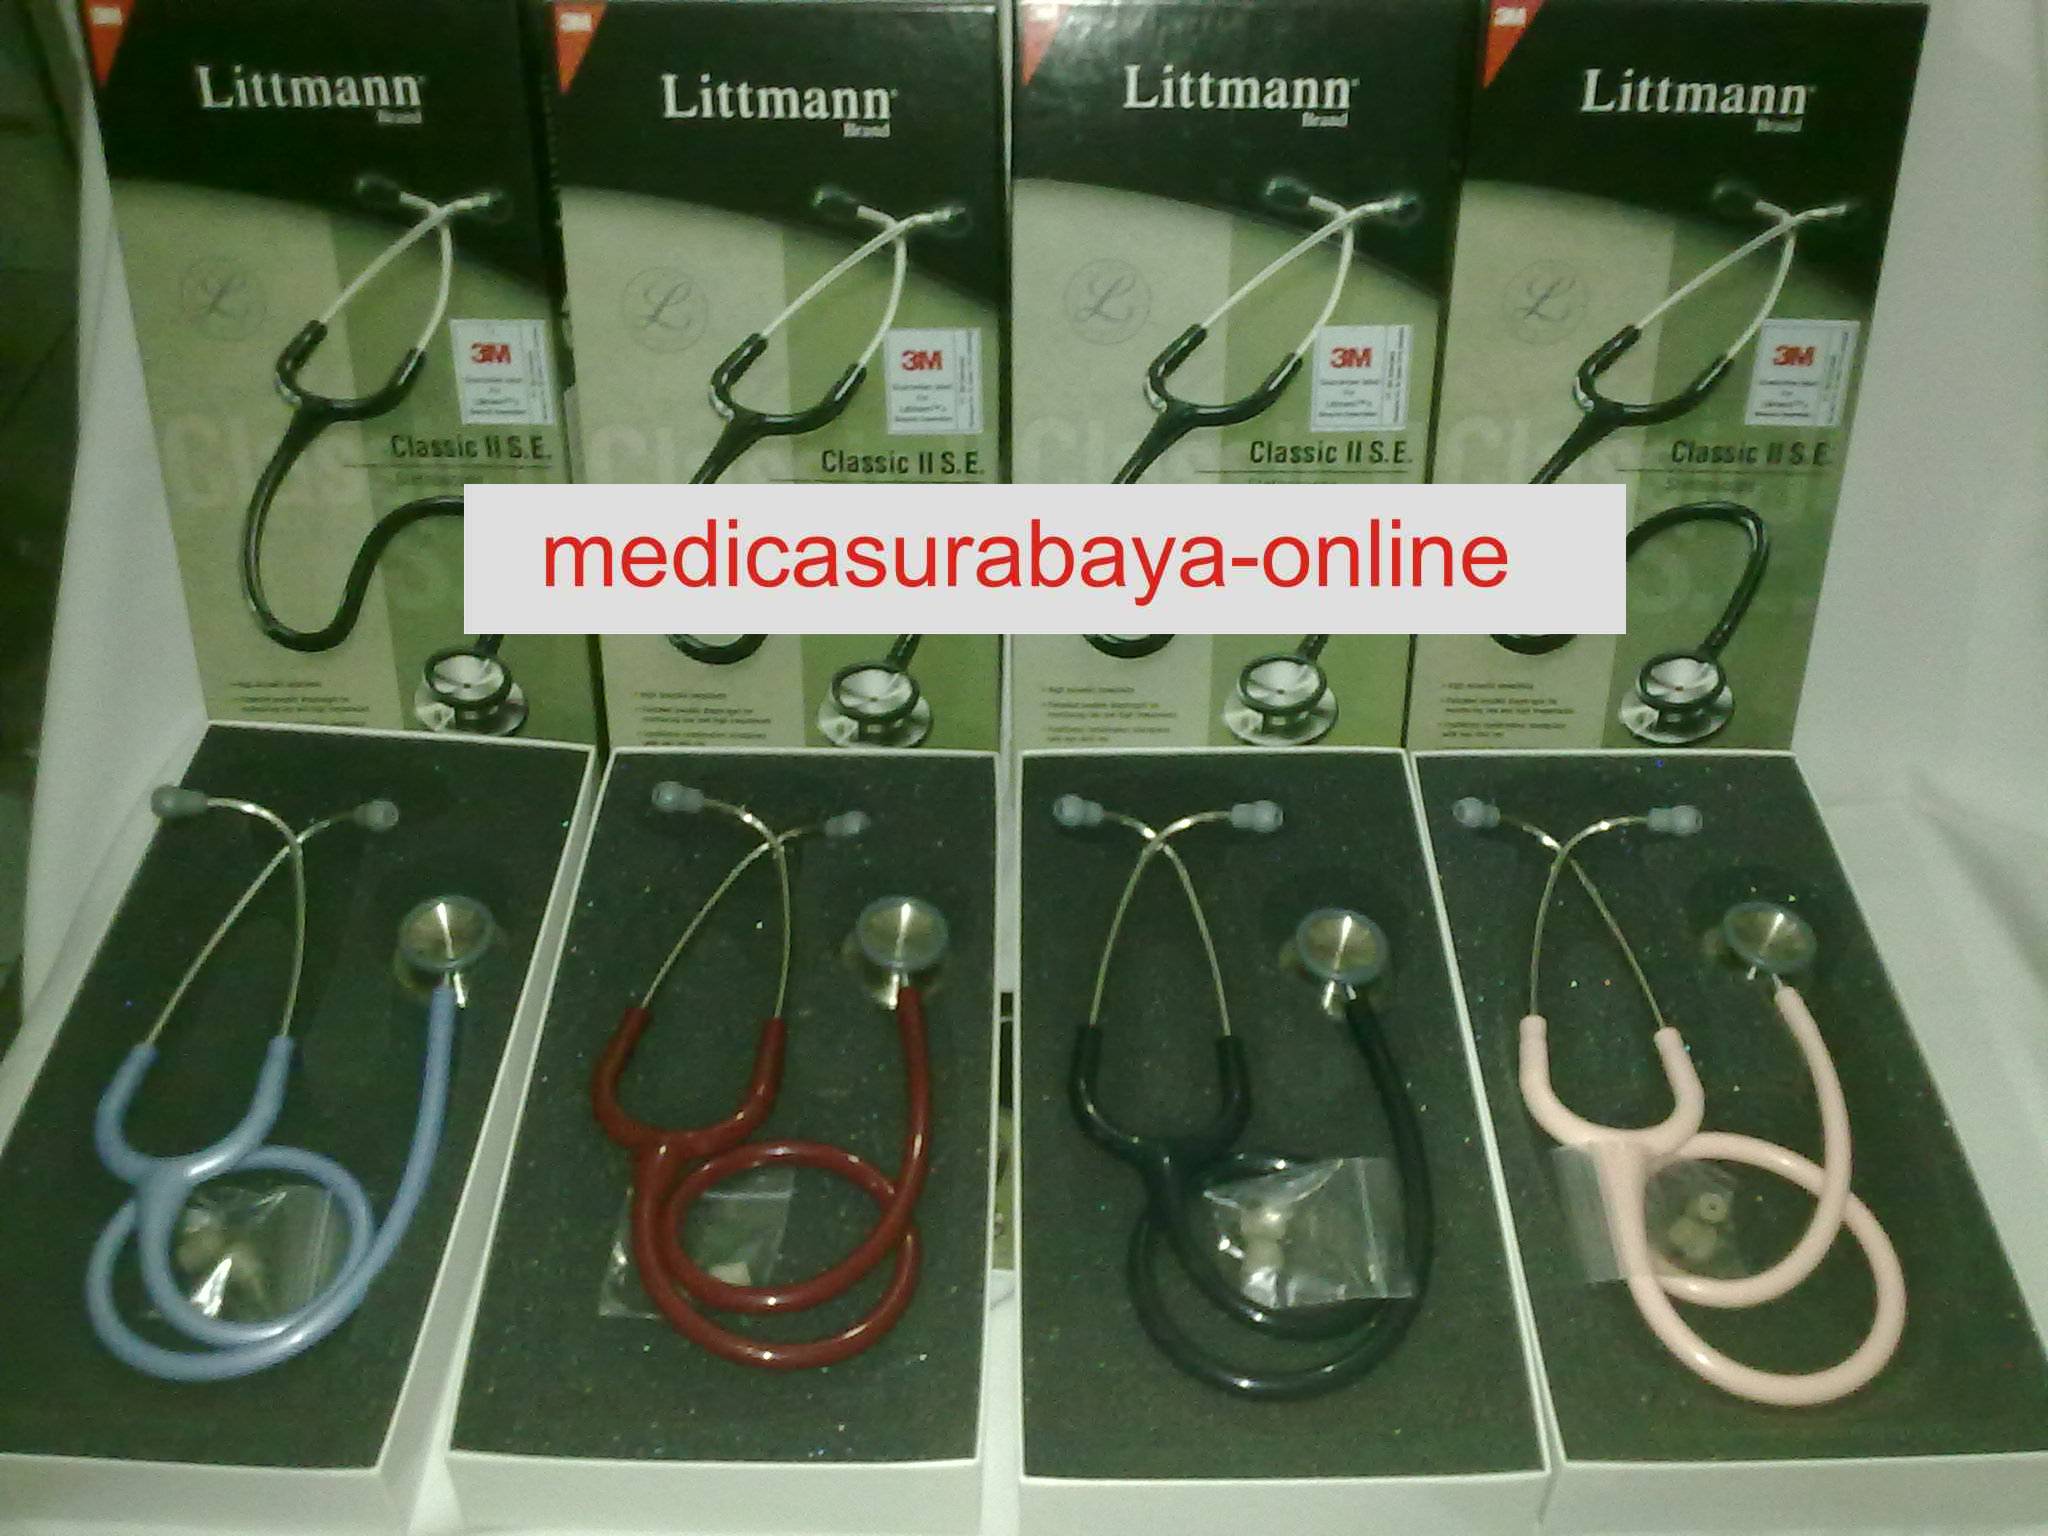 http://alatmedismahasiswa.files.wordpress.com/2011/04/stetoskop-littmann-classic-ii-s-e-internet1.jpg